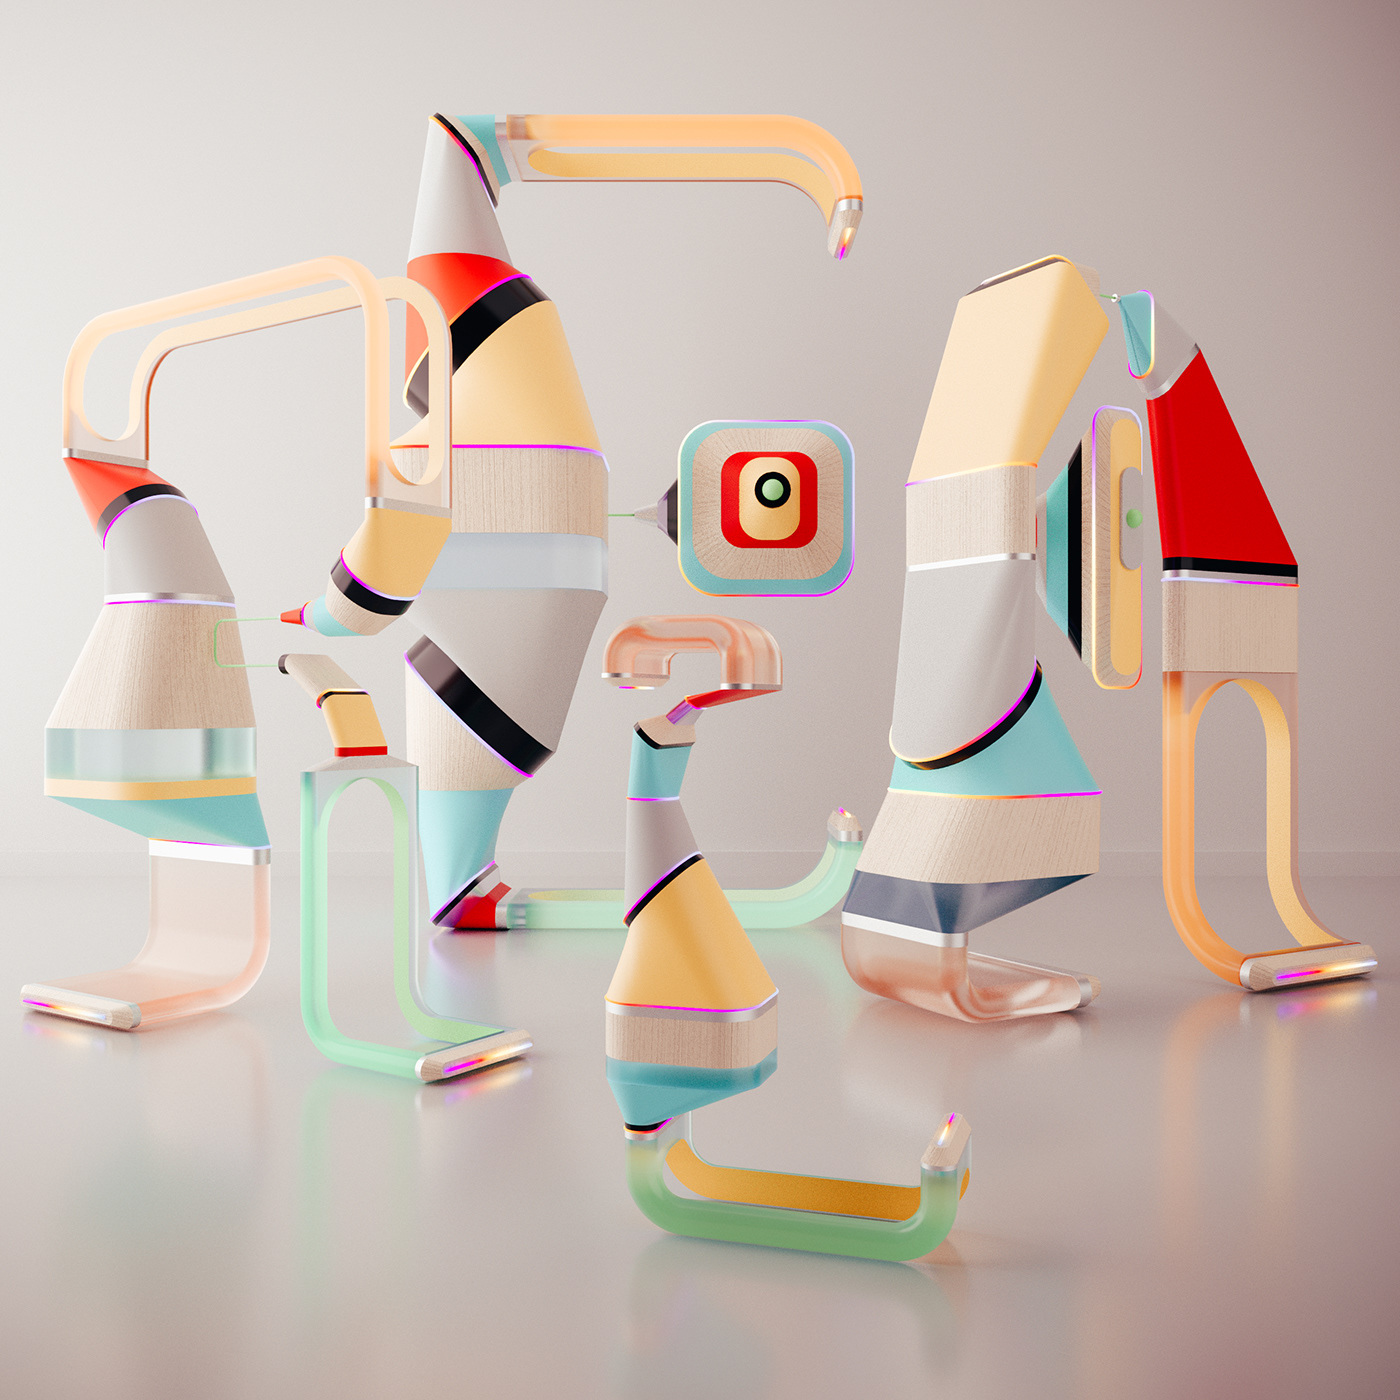 3DType modernletter crystal pantone sculptures 3Dletter colorful neon